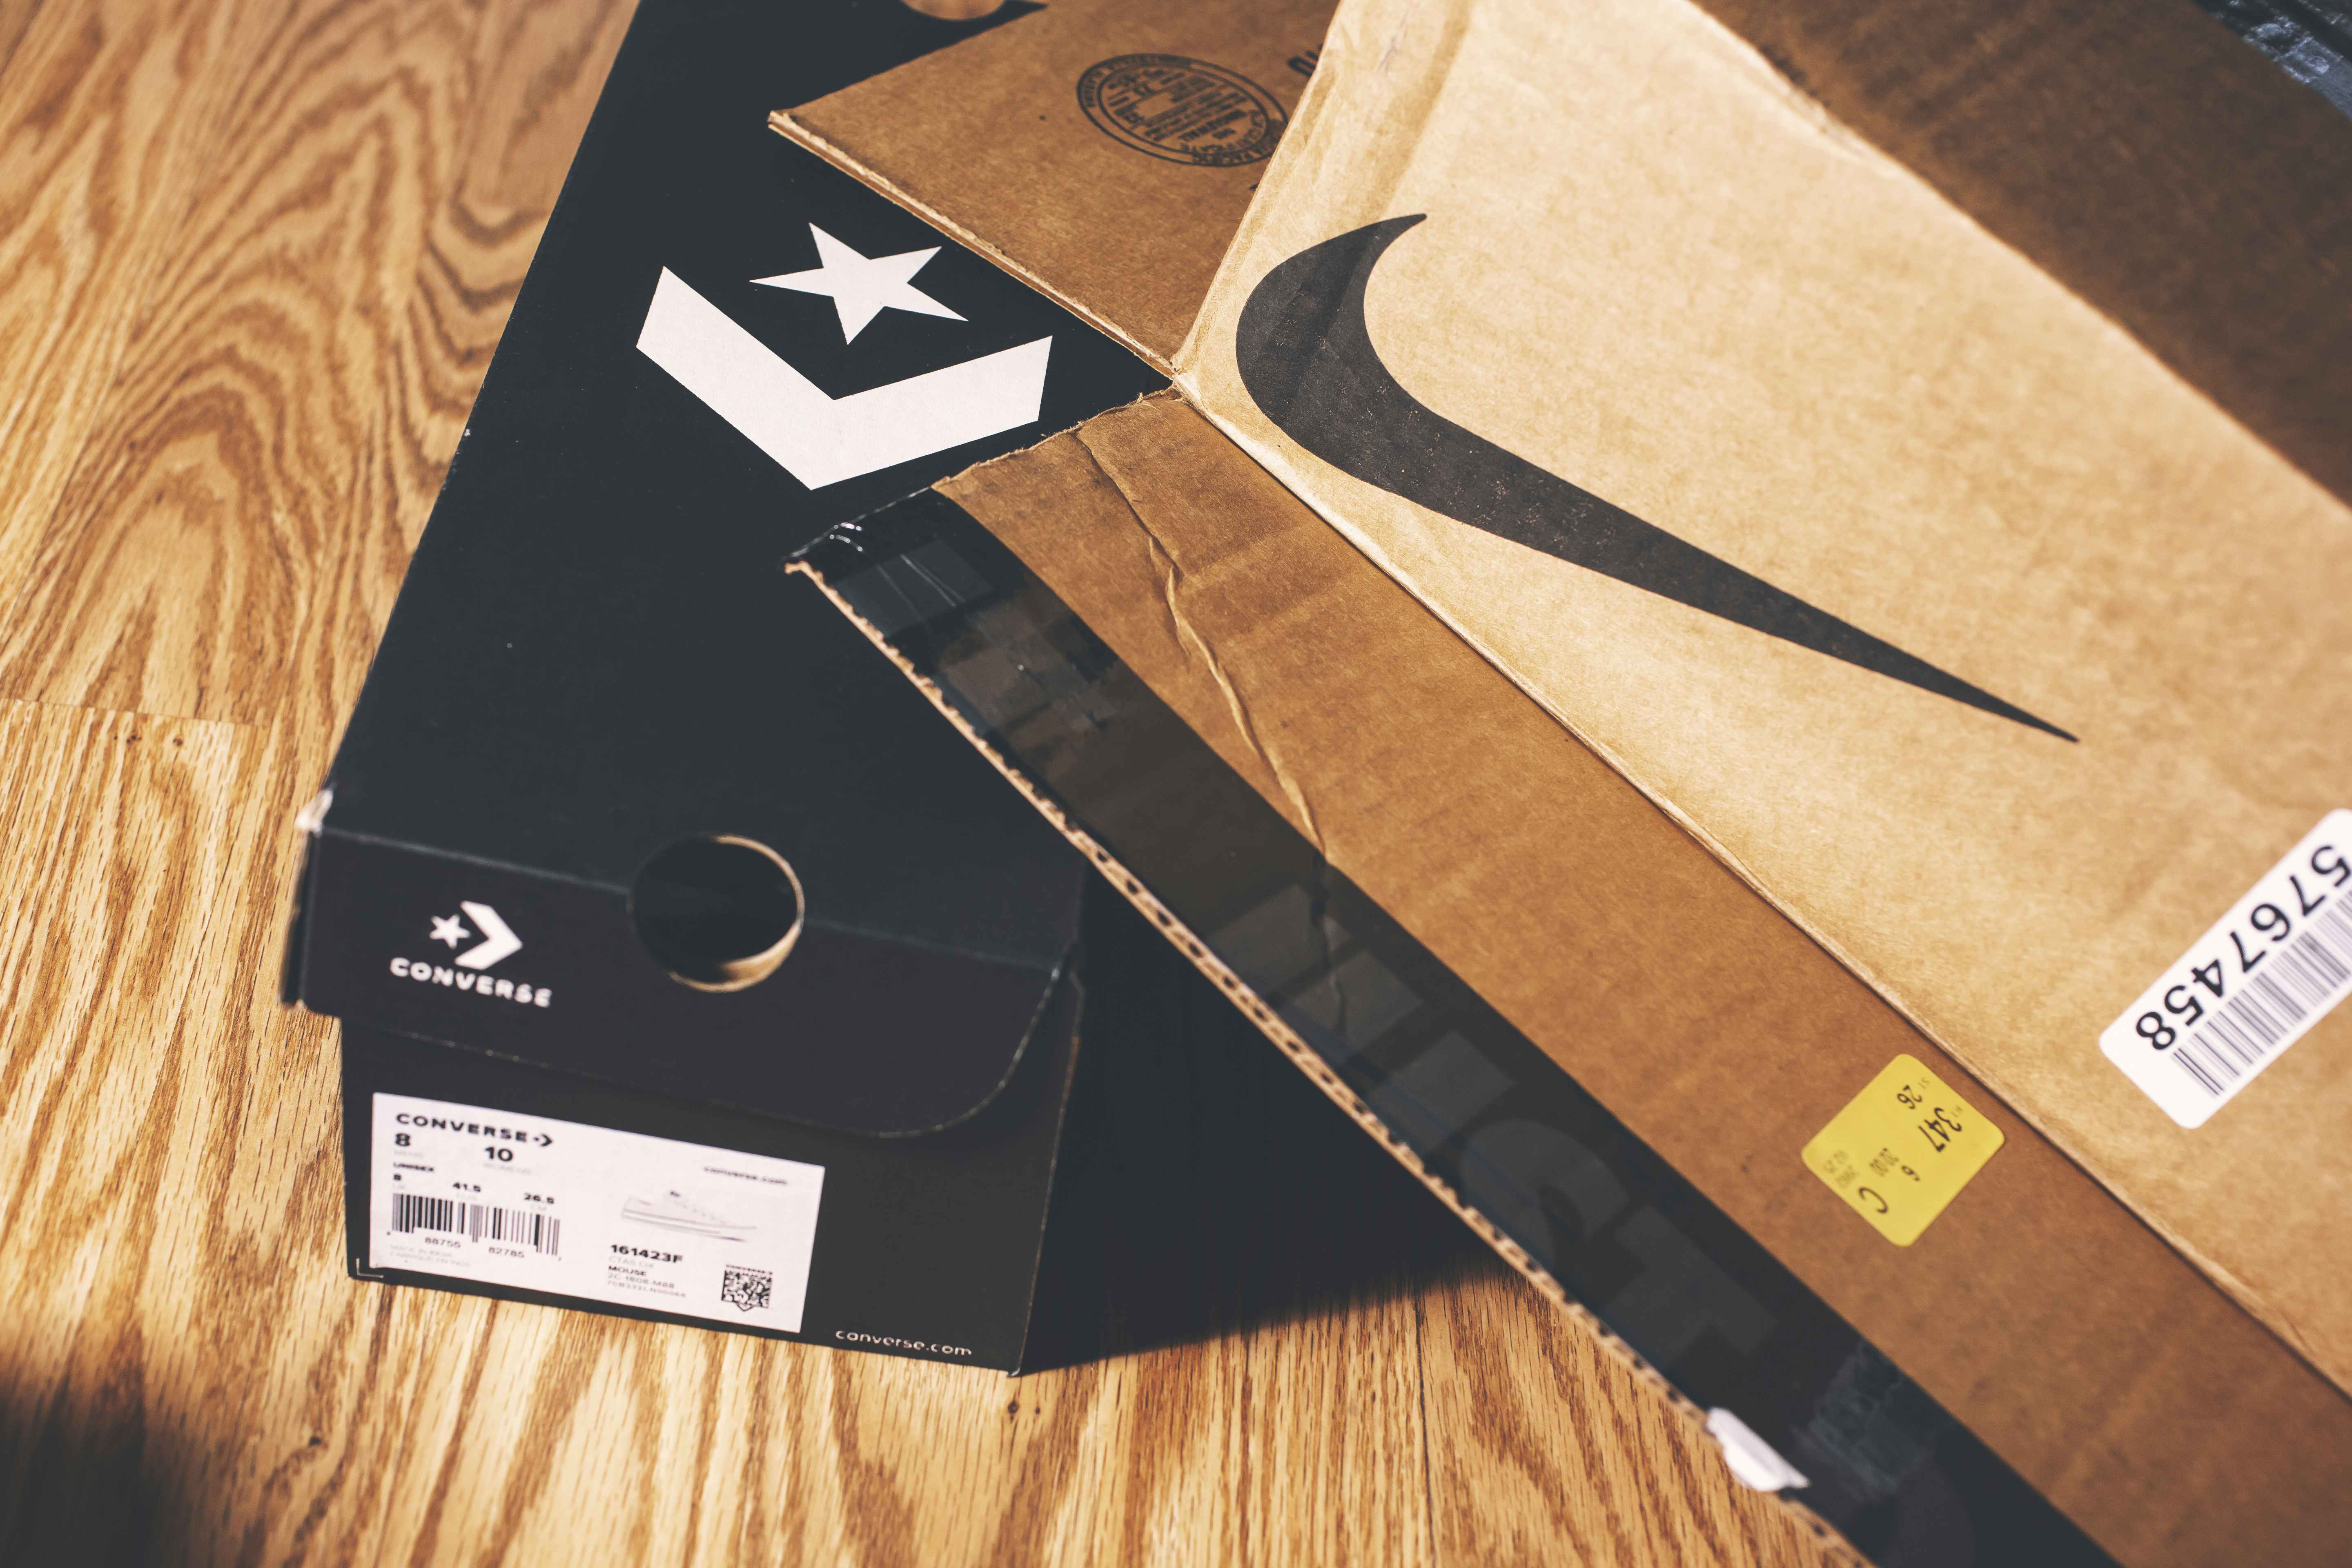 Nike and Converse box